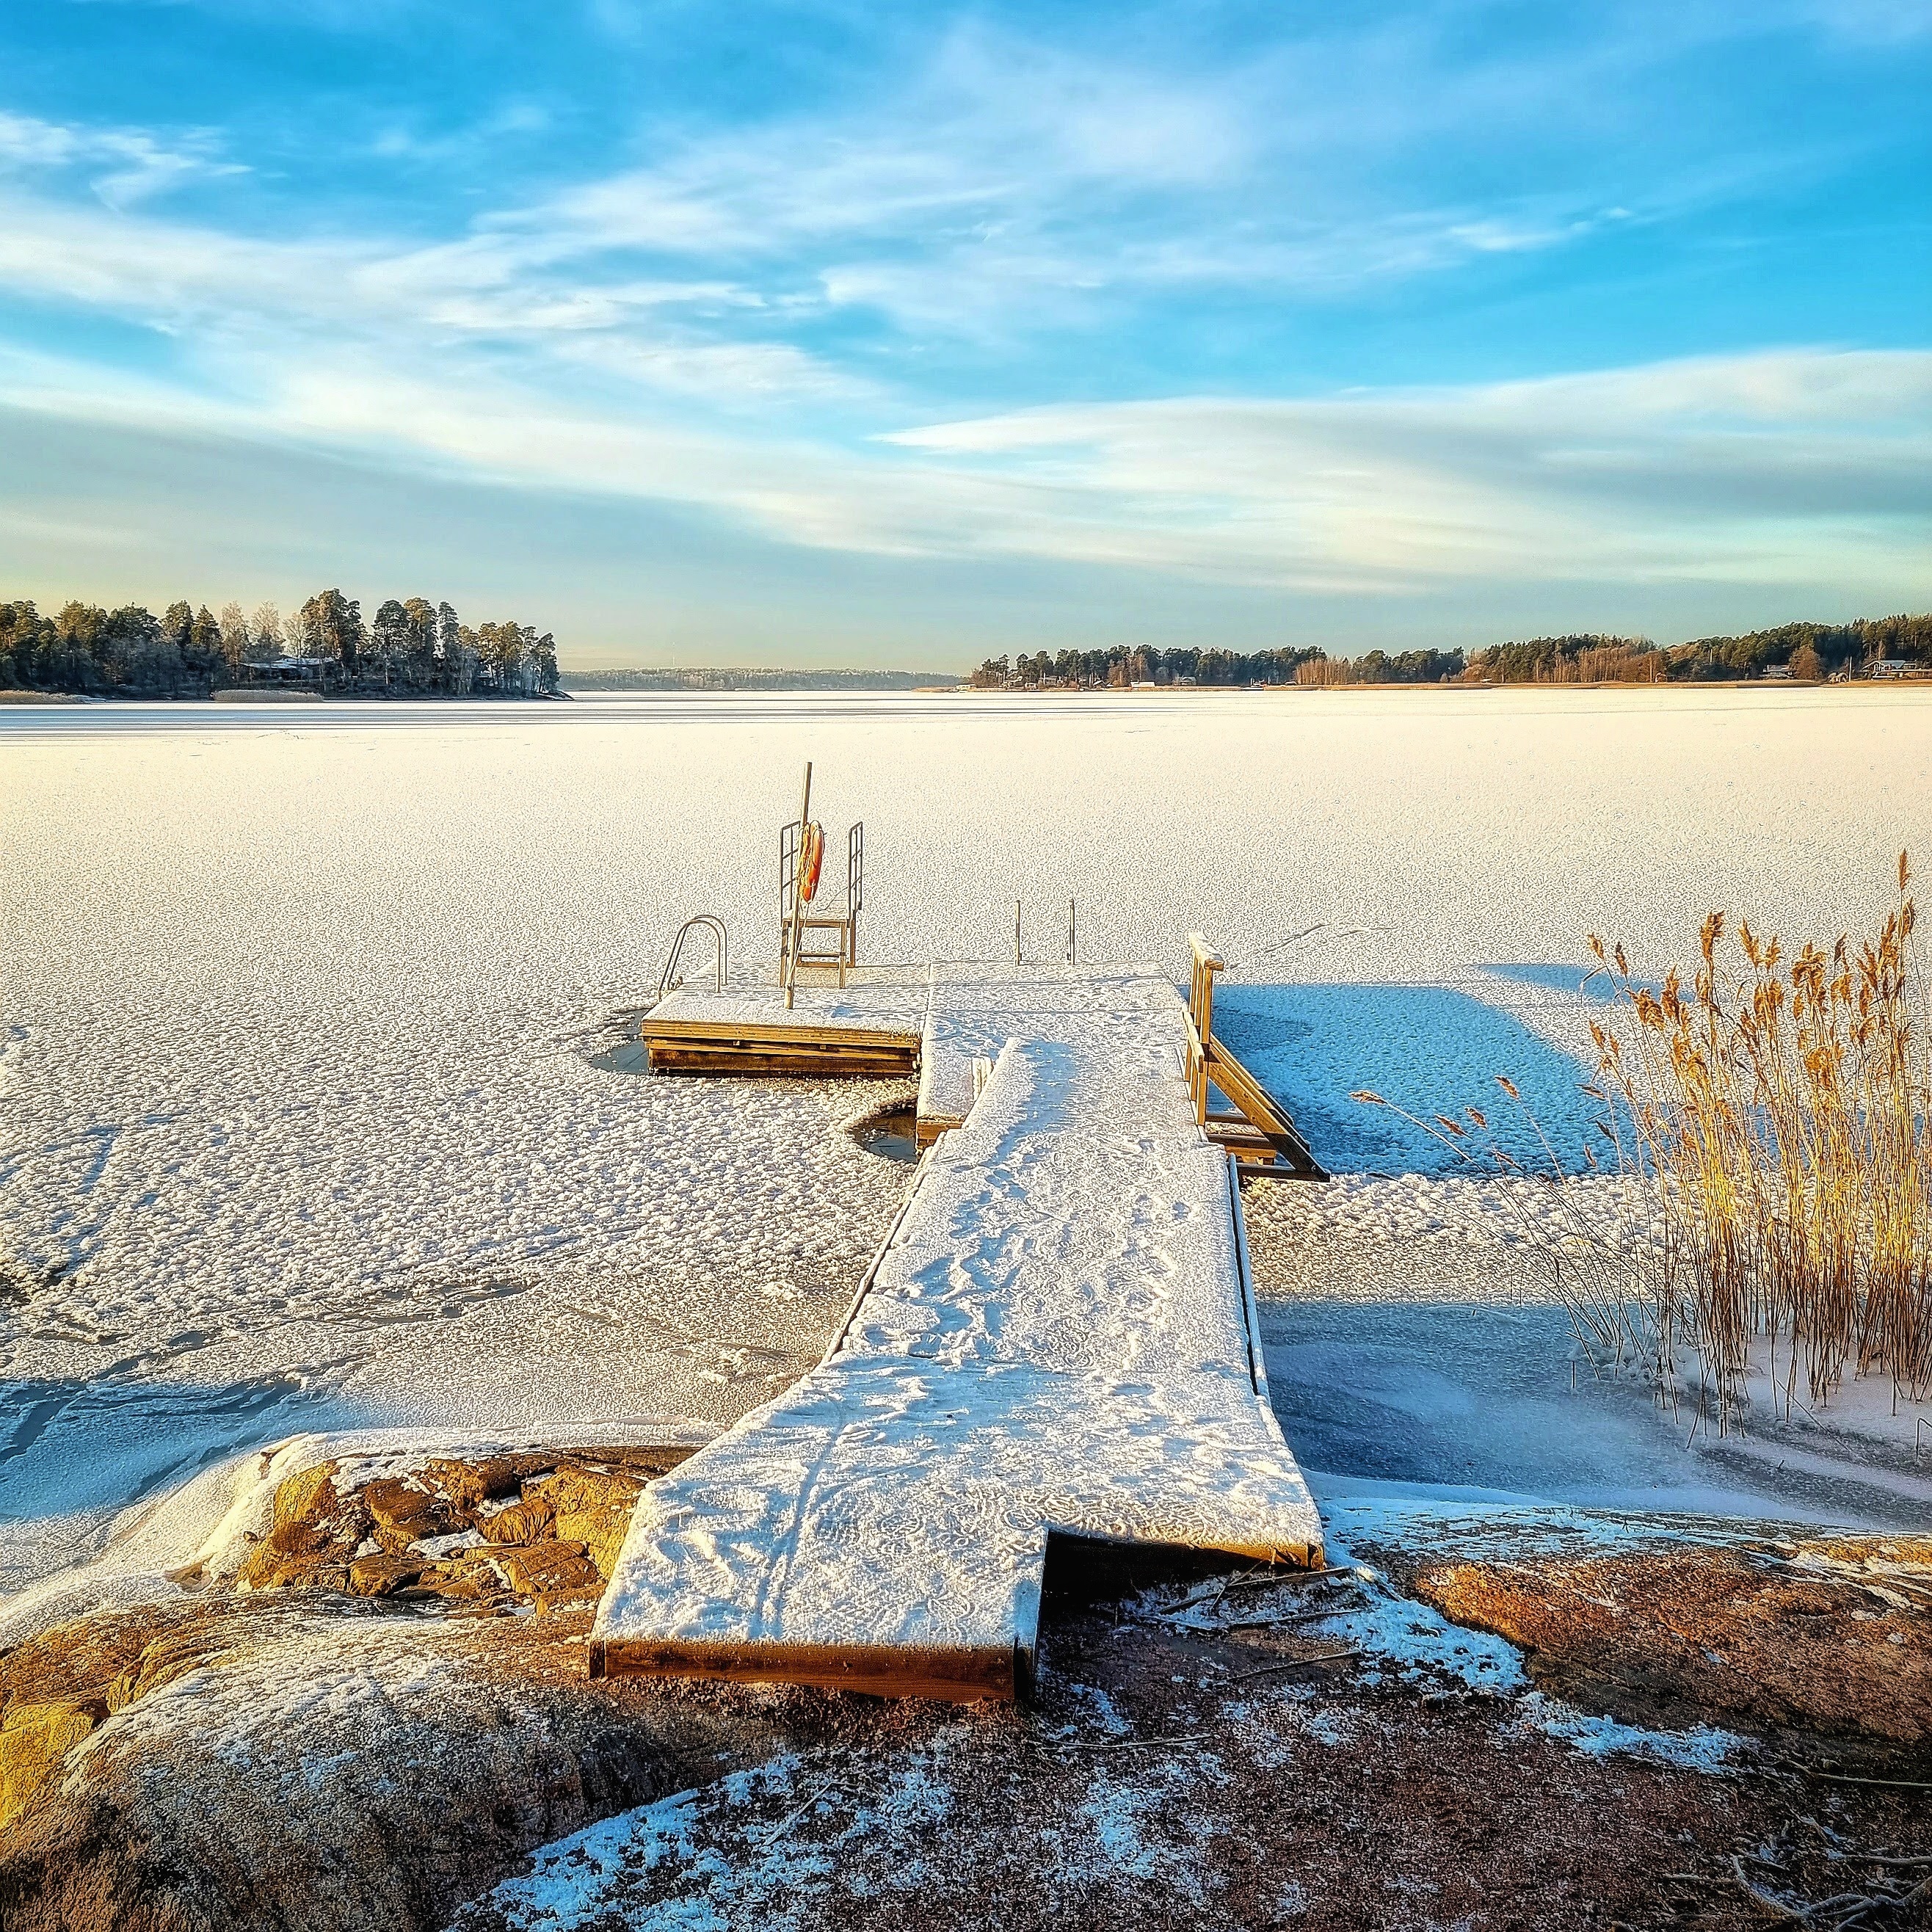 Winter in Naantali, Finland.